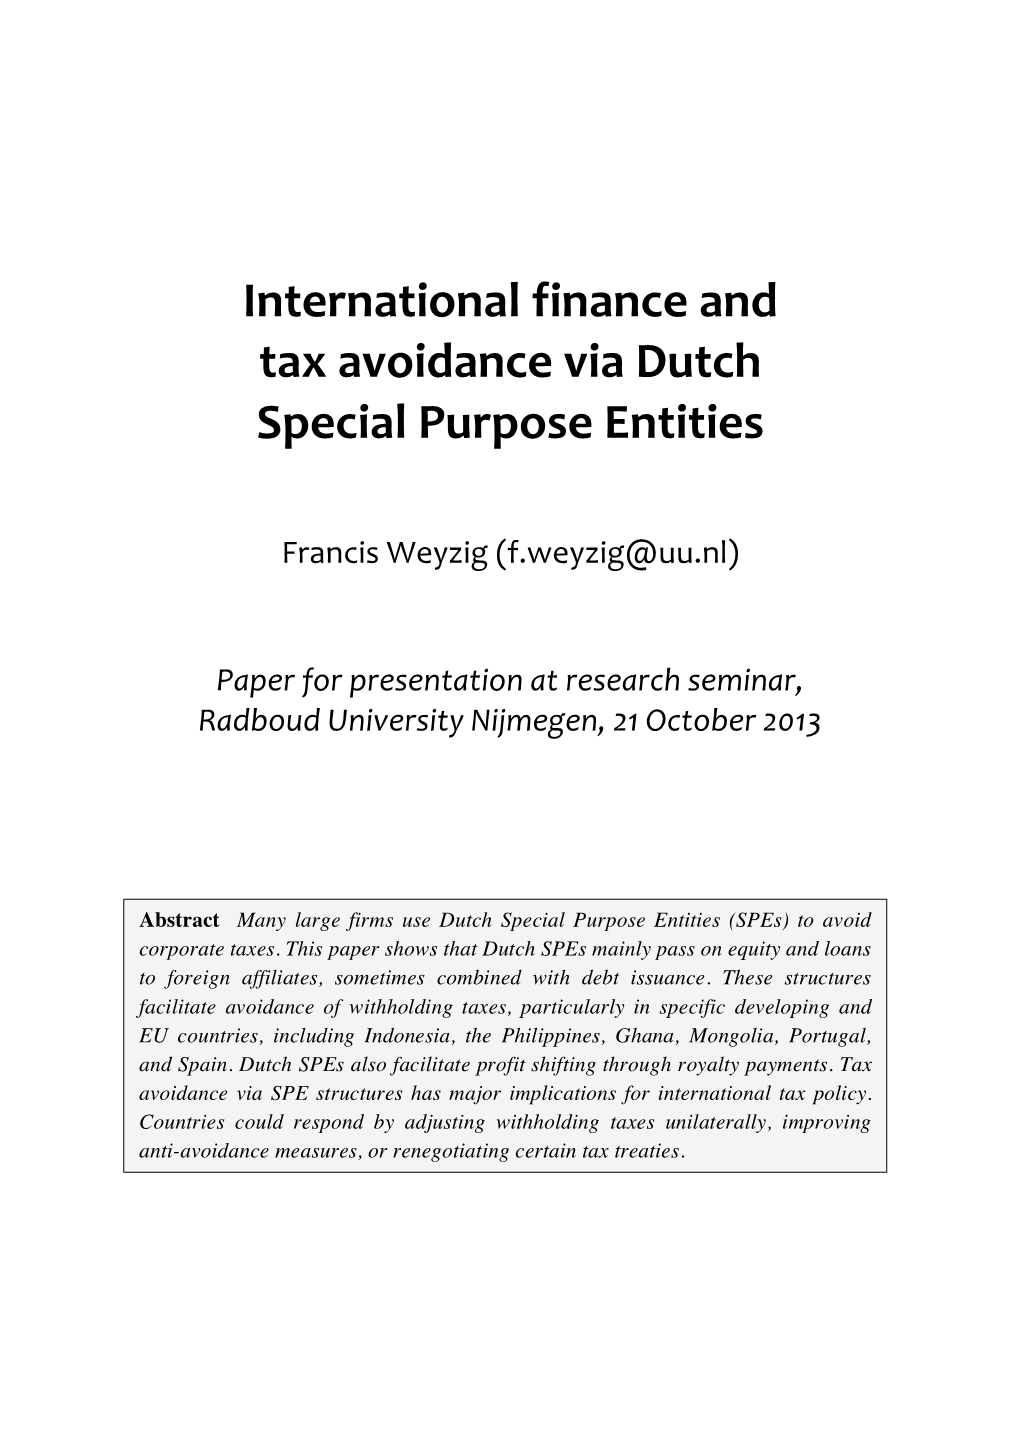 International Finance and Tax Avoidance Via Dutch Special Purpose Entities